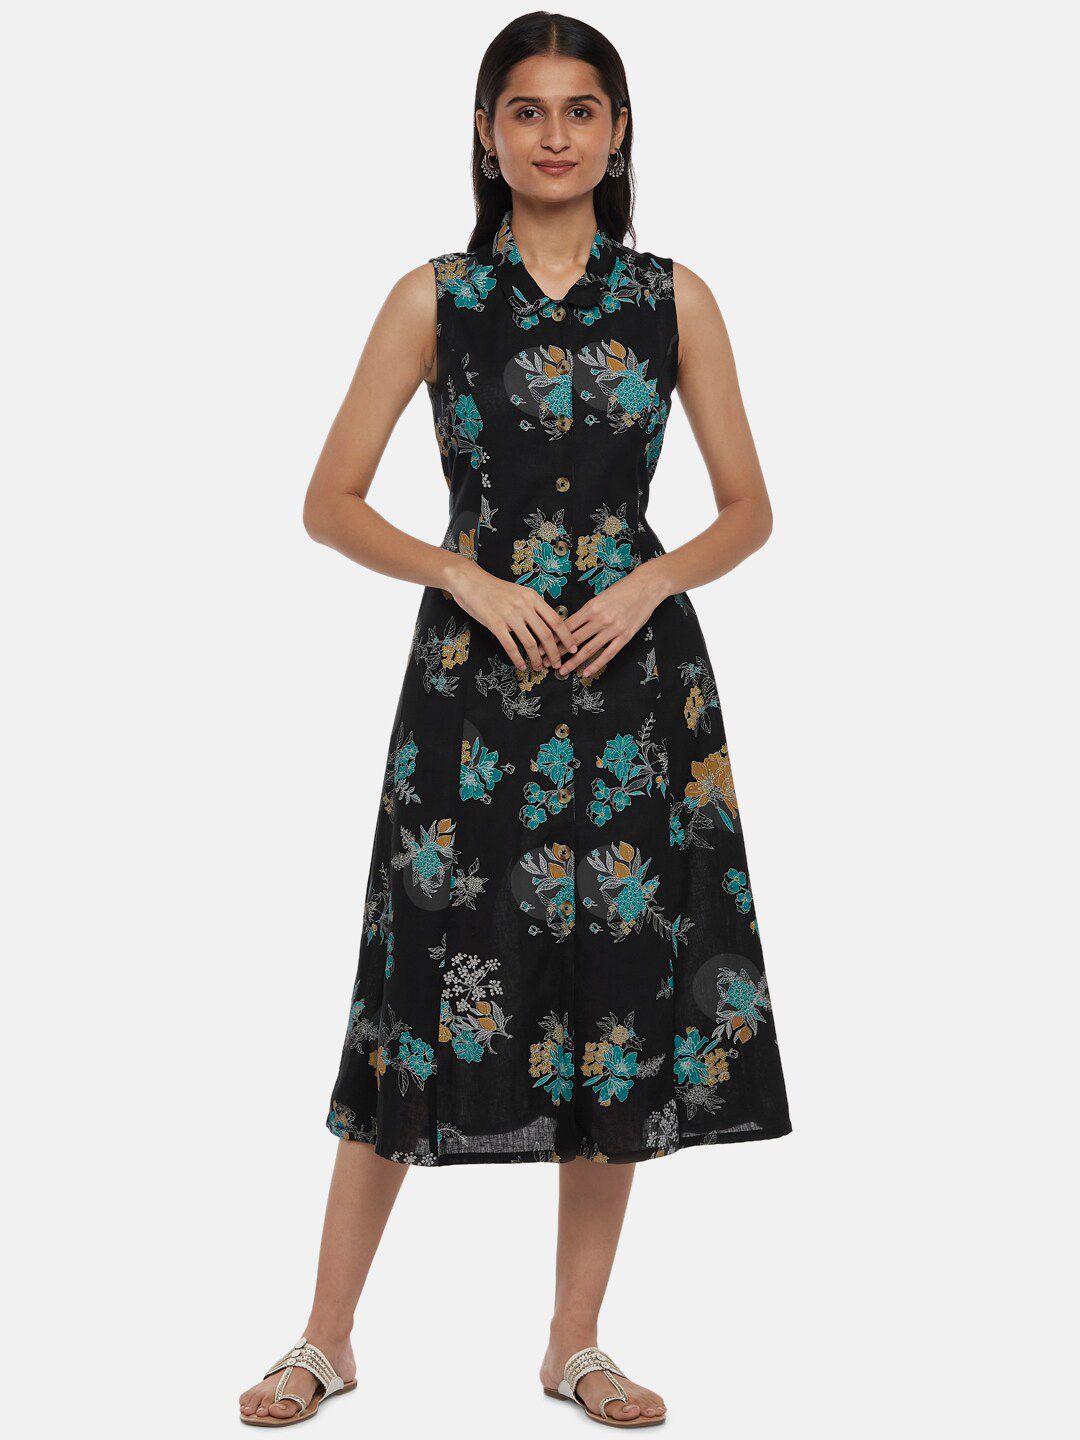 AKKRITI BY PANTALOONS Black Floral Midi Dress Price in India